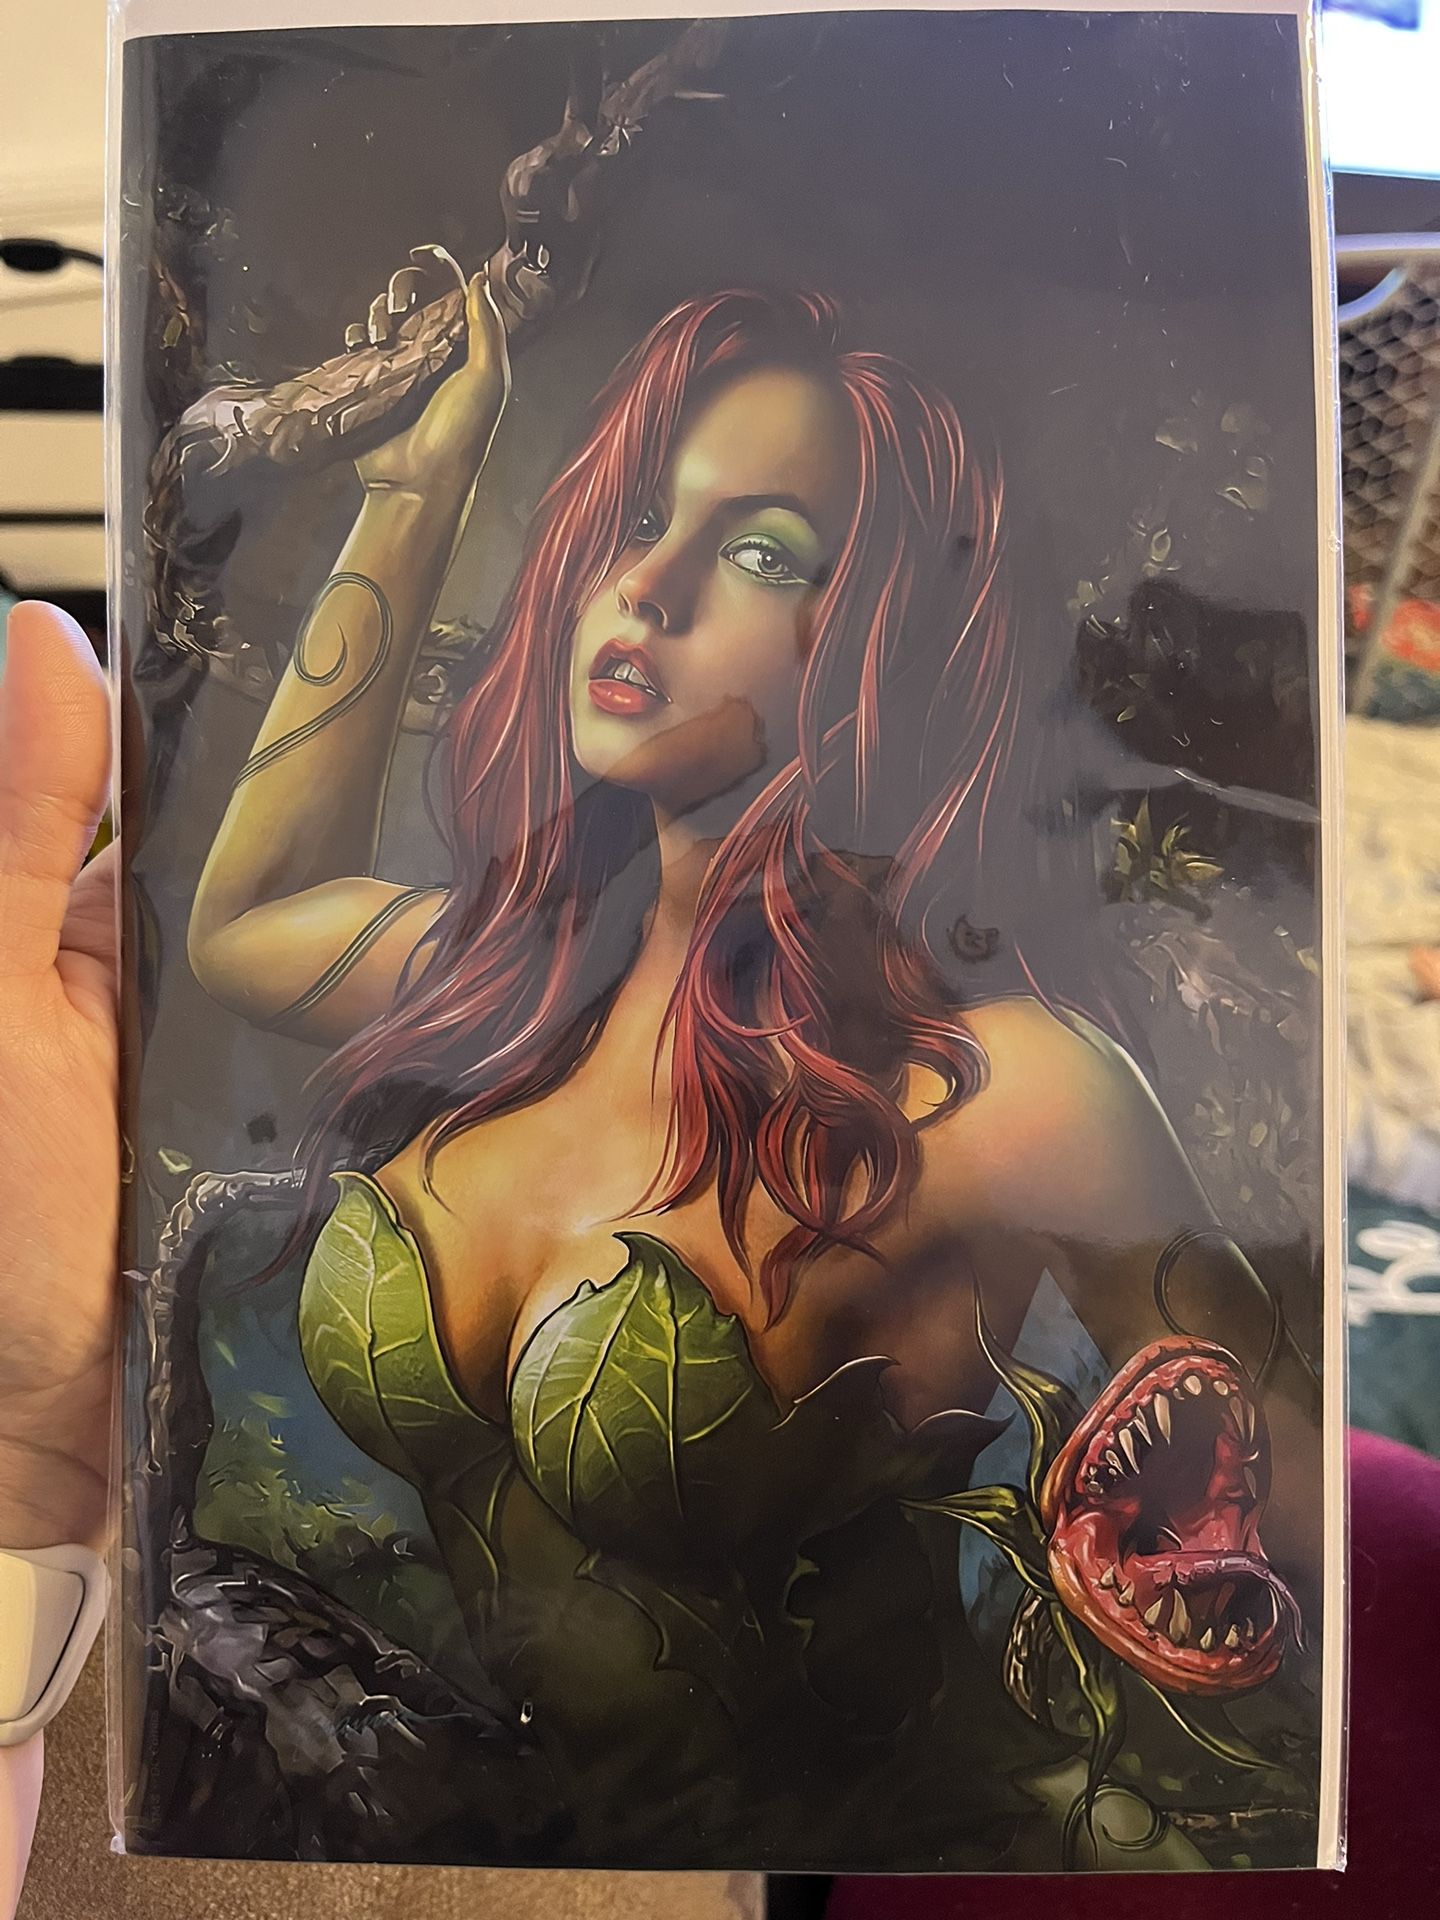 Harley Quinn & Poison Ivy #1